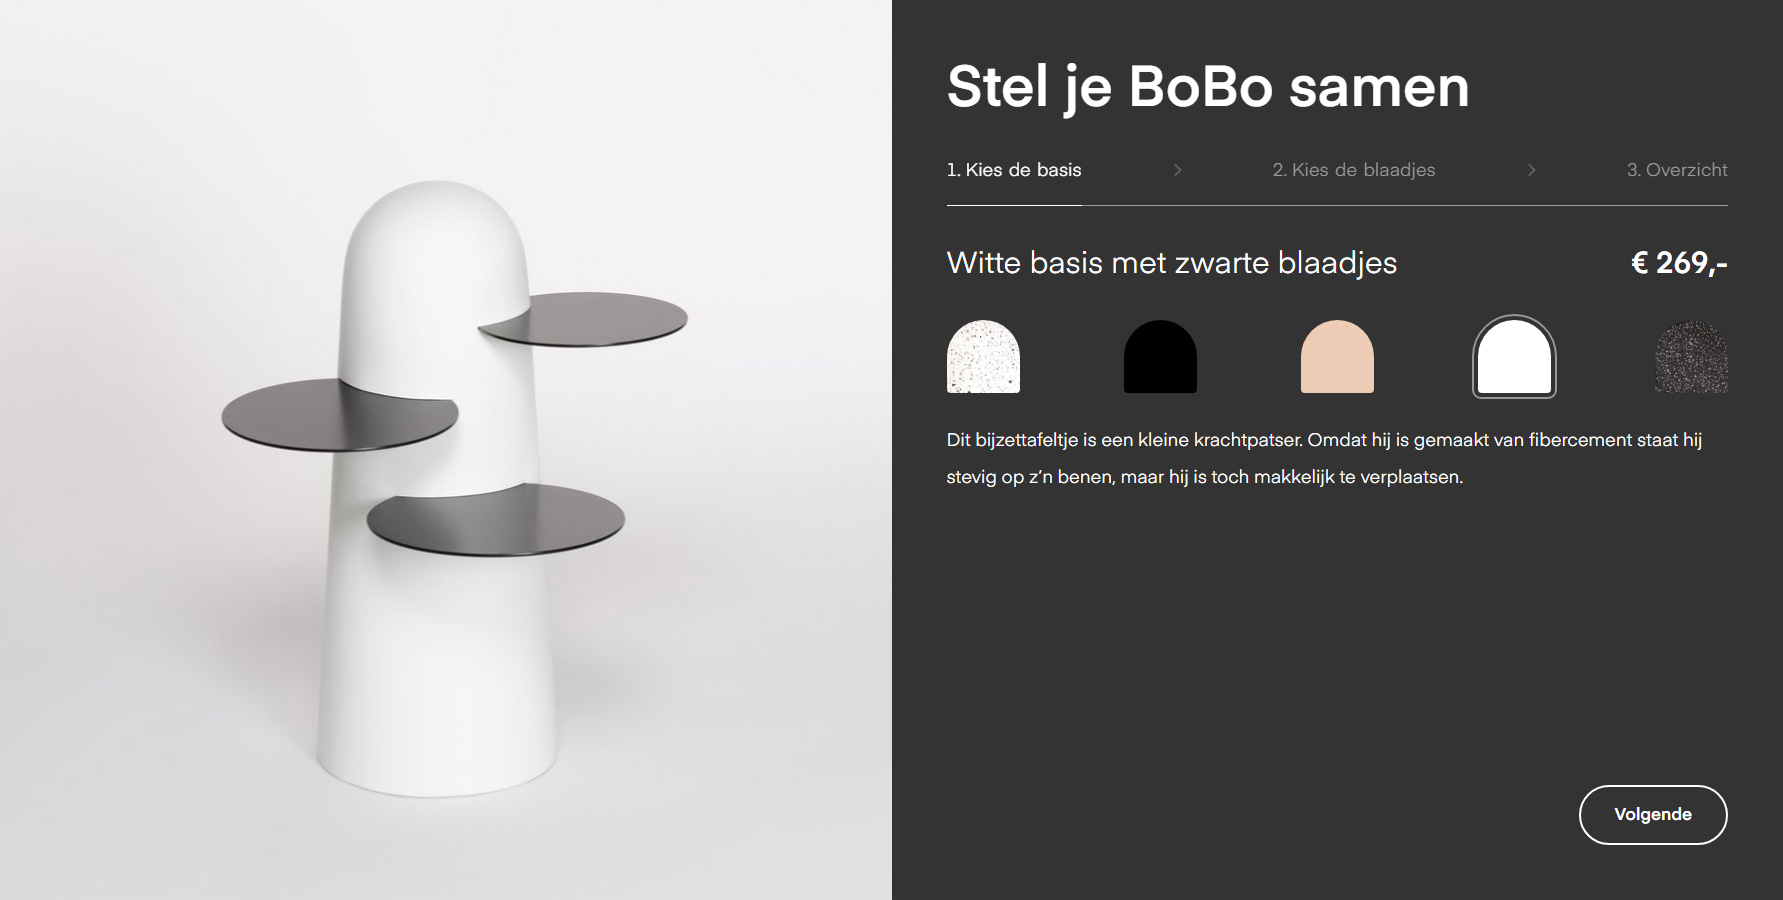 BoBo - The perfect sidekick - Website of the Day